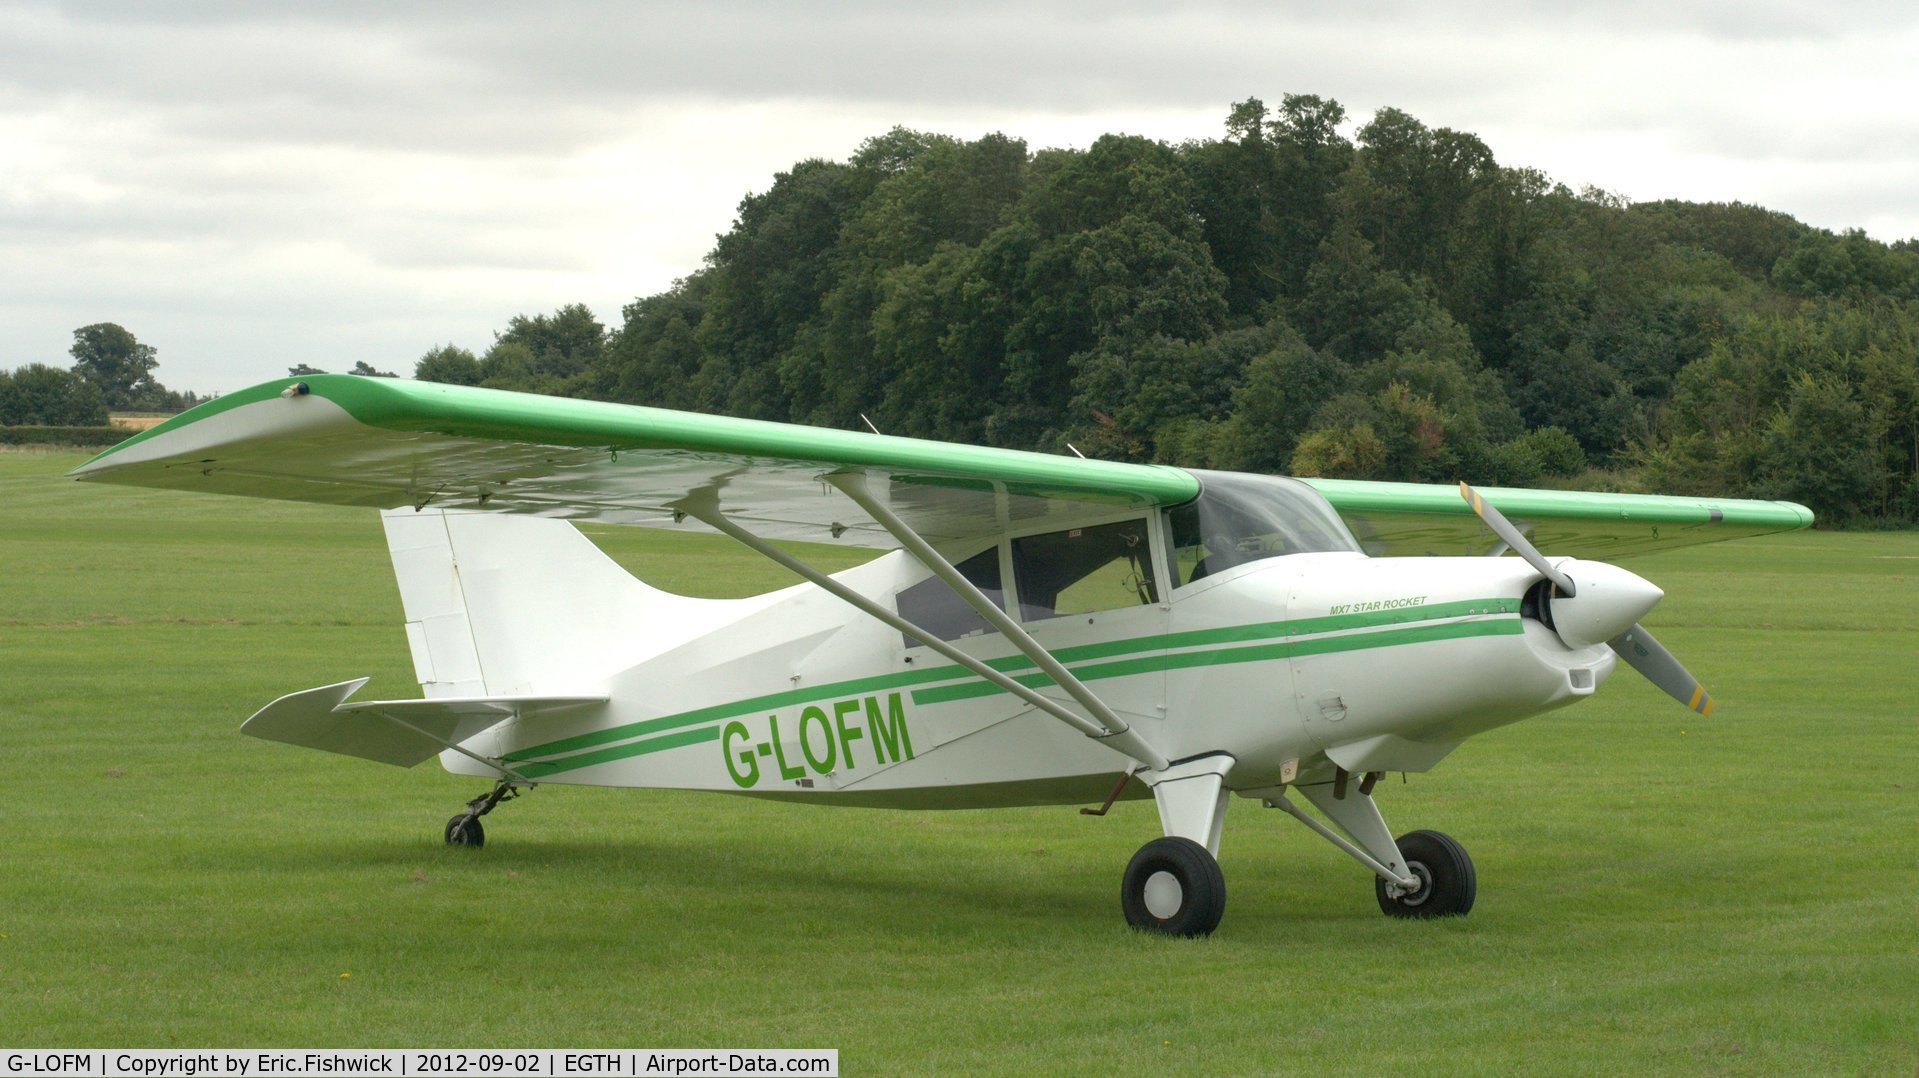 G-LOFM, 1995 Maule MX-7-180A Sportplane C/N 20027C, 3. G-LOFM at Shuttleworth Pagent Air Display, Sept. 2012.